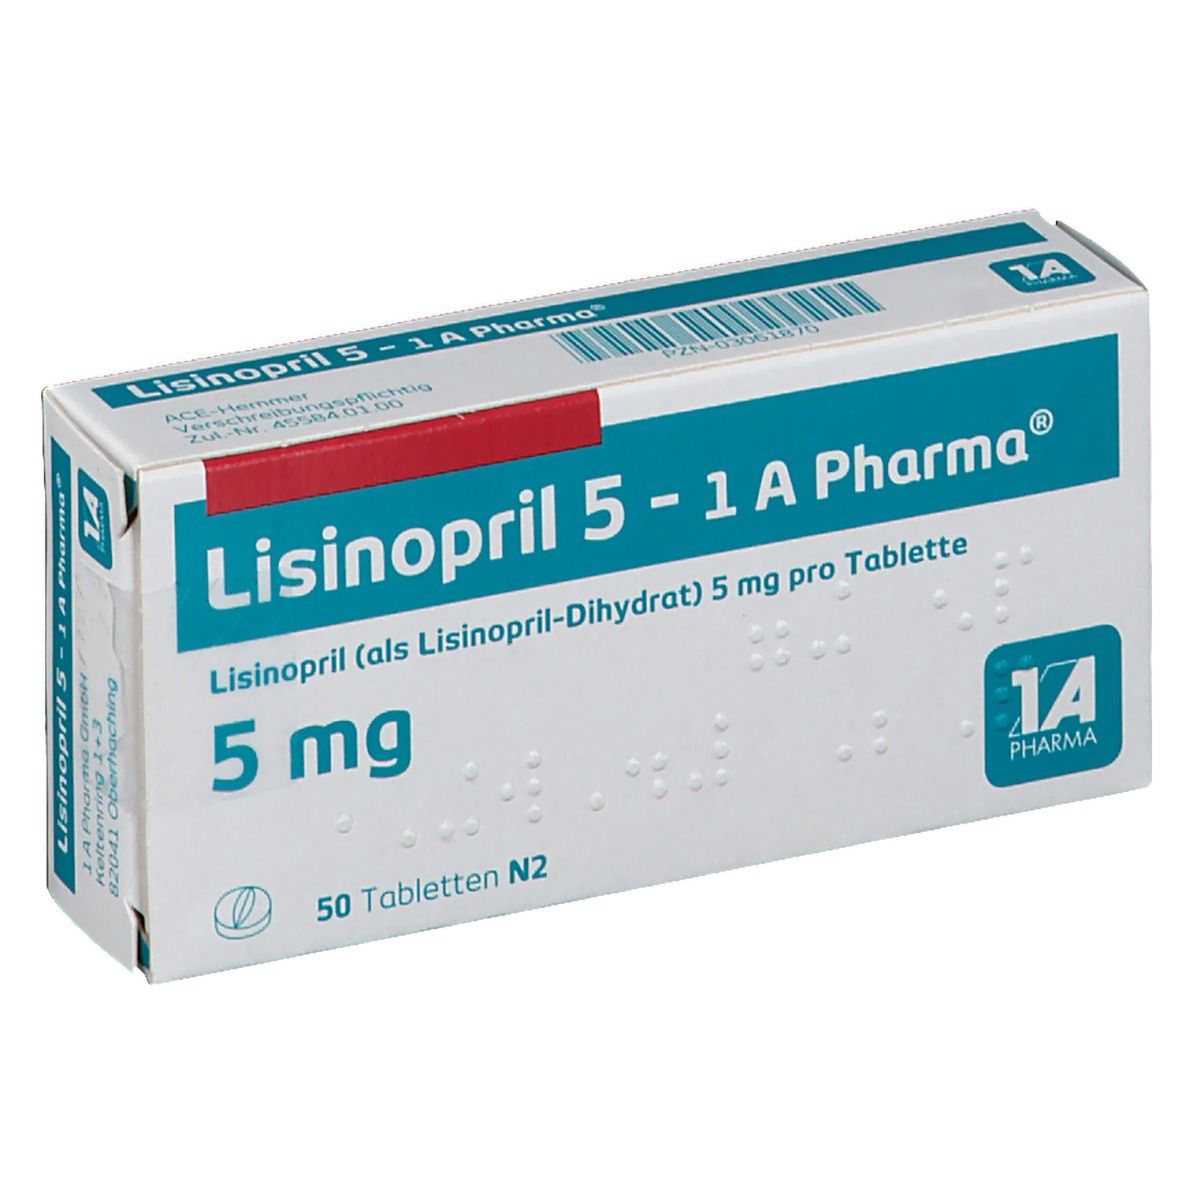 Lisinopril 5 - 1 A Pharma®